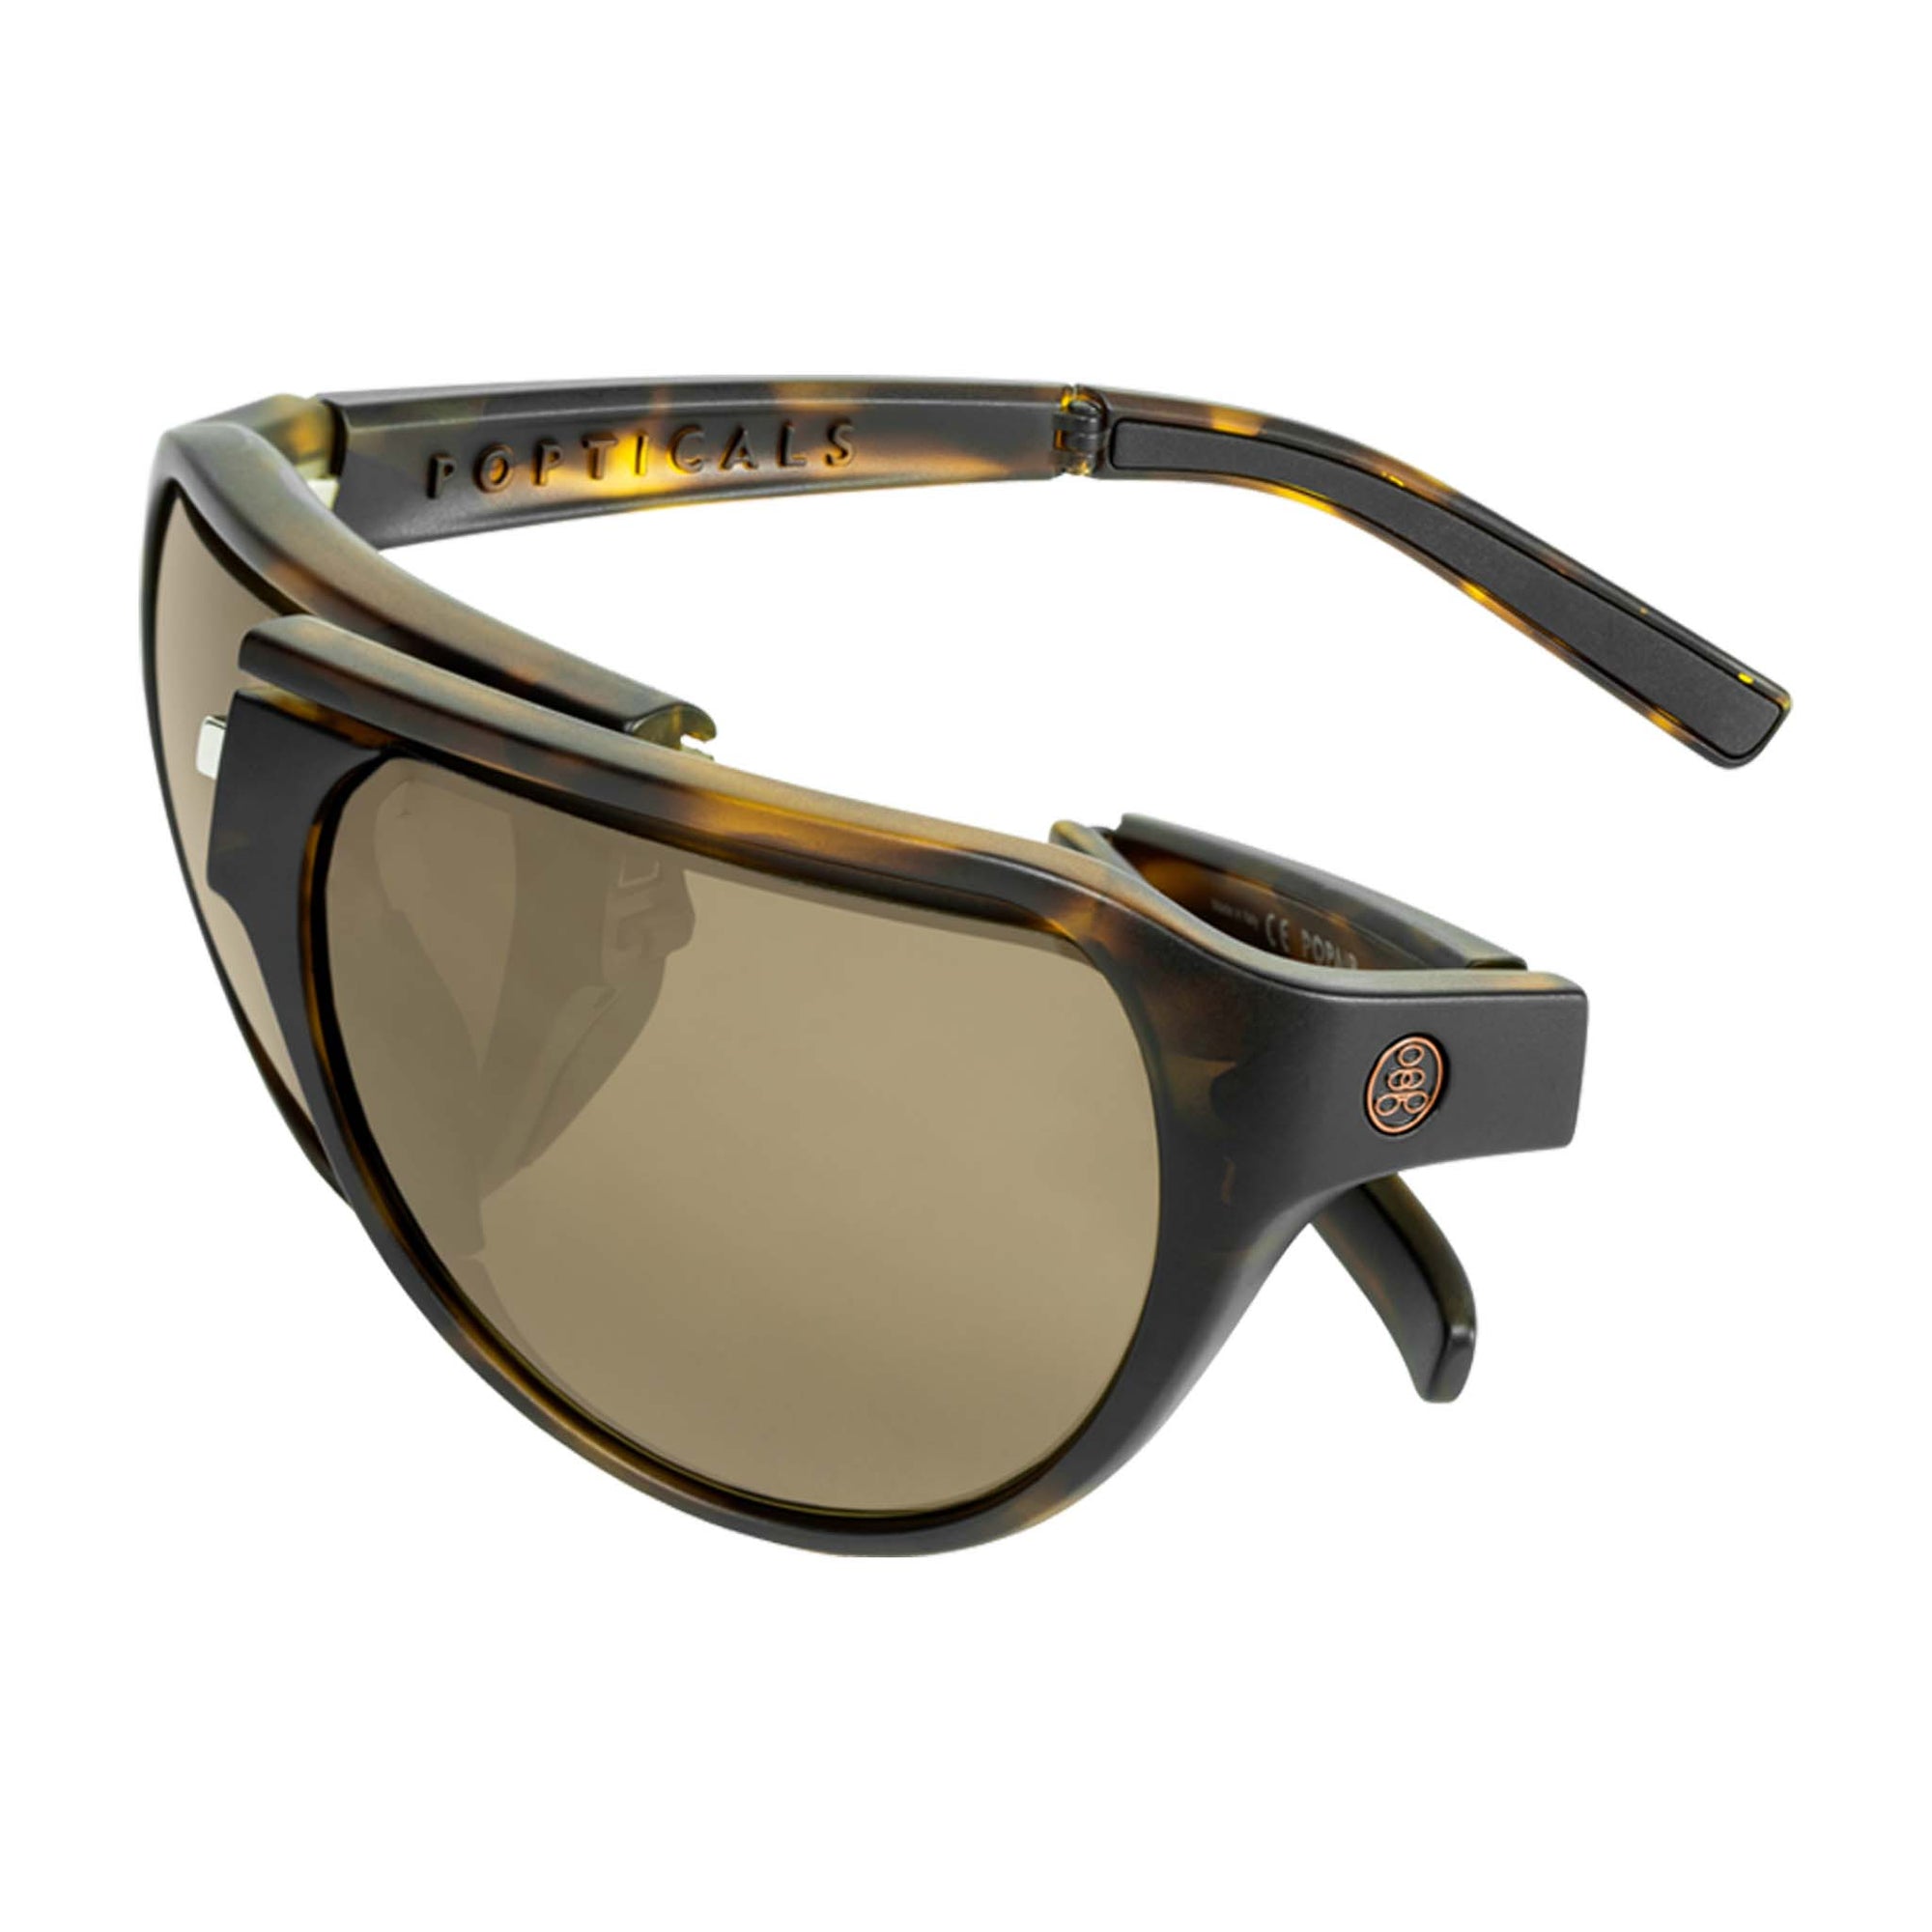 Popticals, Premium Compact Sunglasses, PopAir, 300010-CUNP, Polarized Sunglasses, Matte Tortoise Frame, Brown Lenses, Spider View